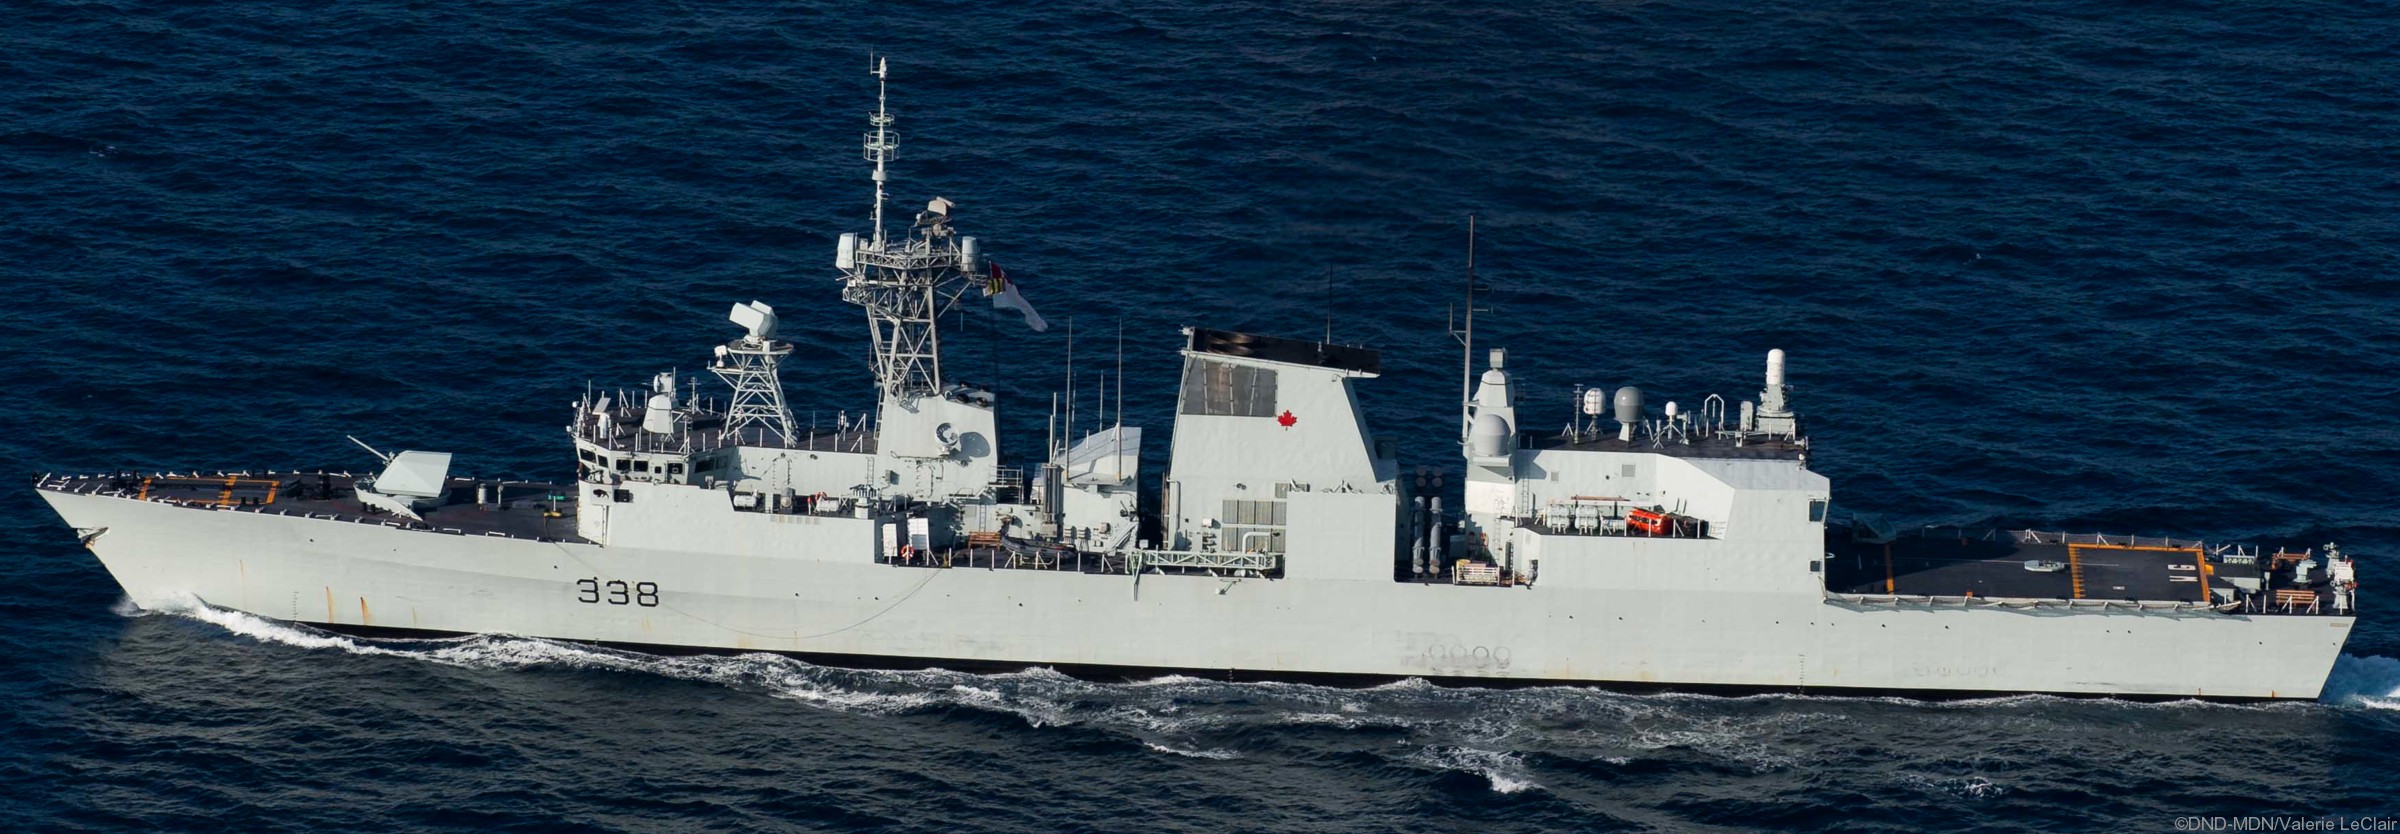 ffh-338 hmcs winnipeg halifax class helicopter patrol frigate ncsm royal canadian navy 04